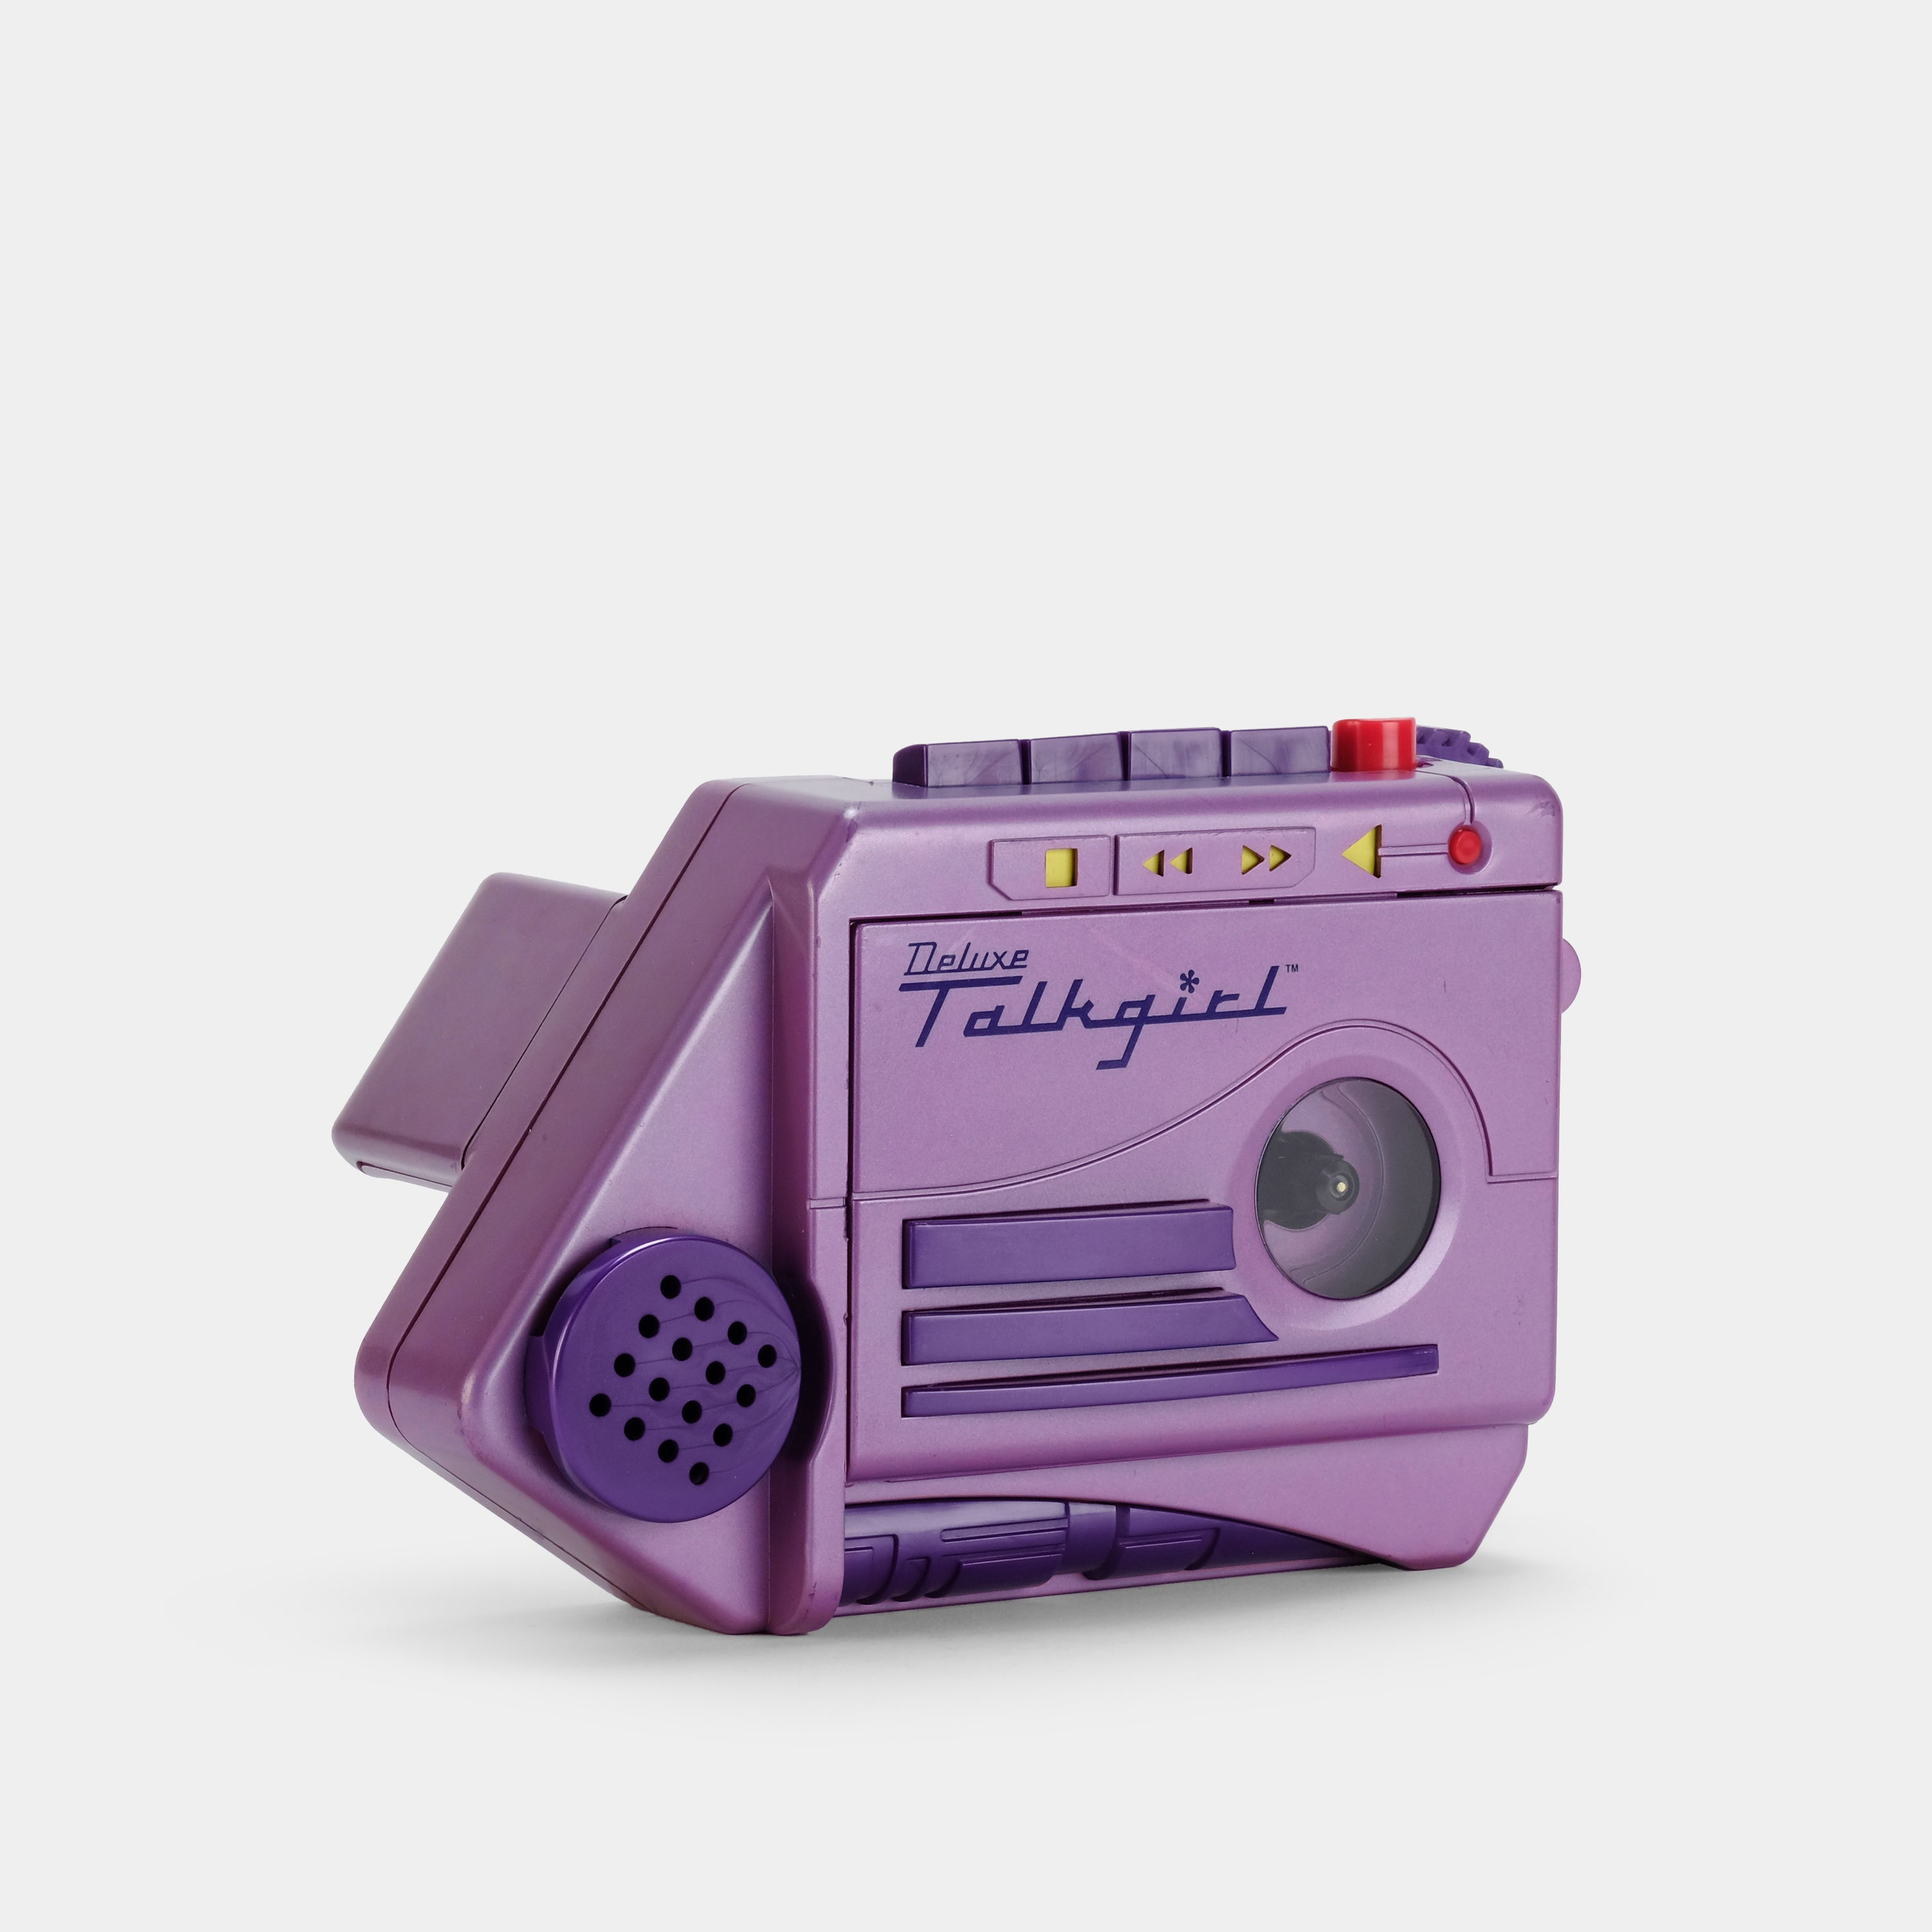 Cassette Player/Recorder